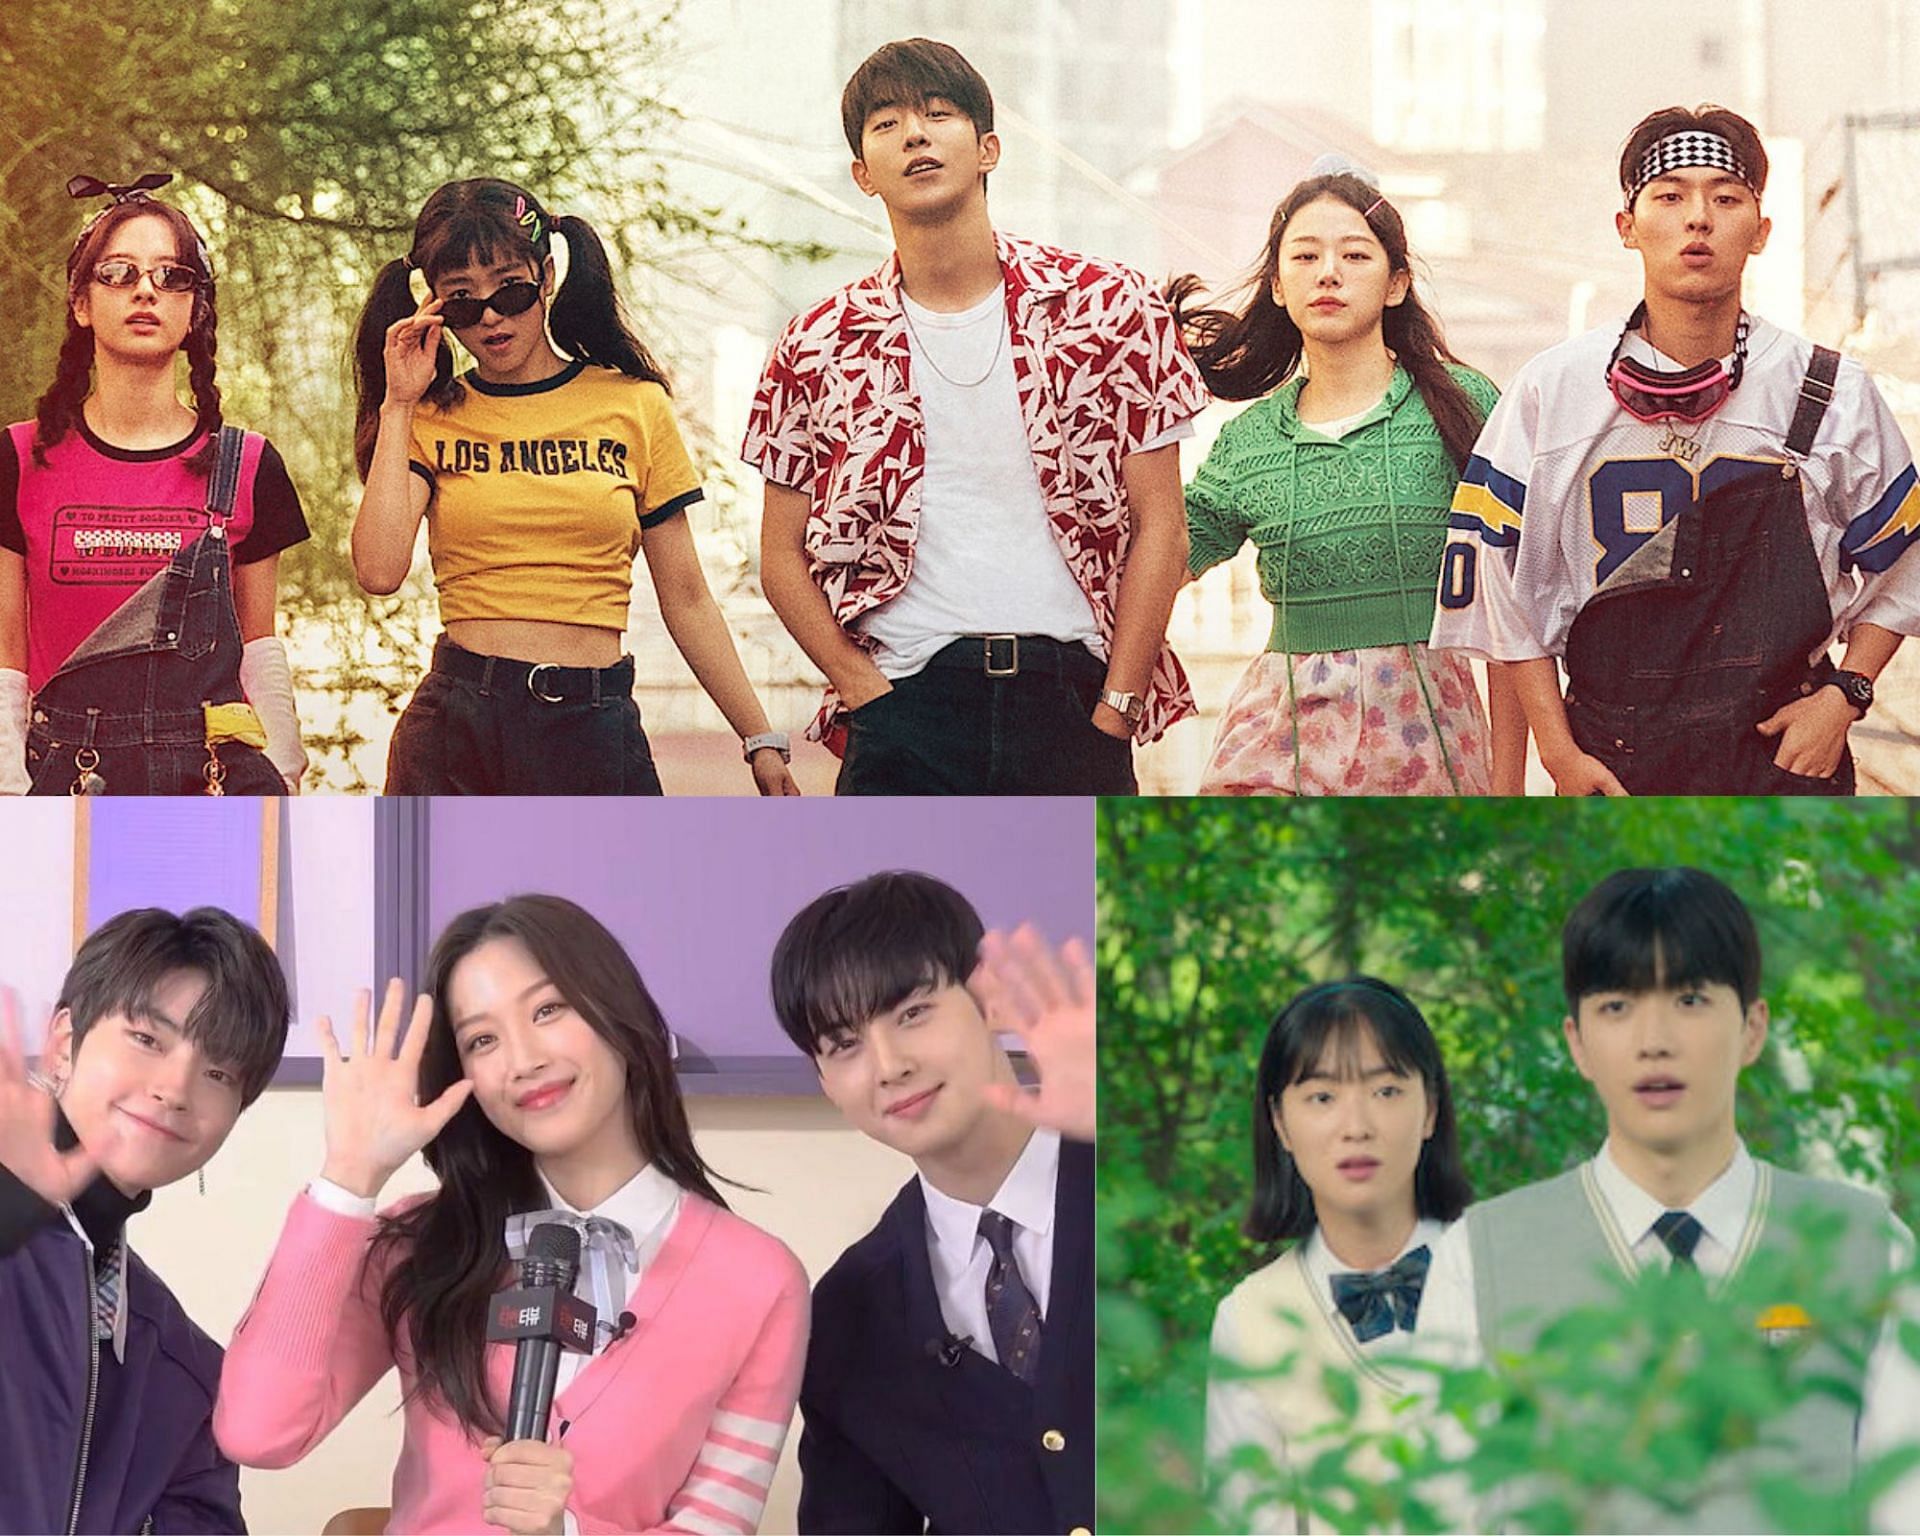 Six high school romantic K-dramas to add to your binge-watch list